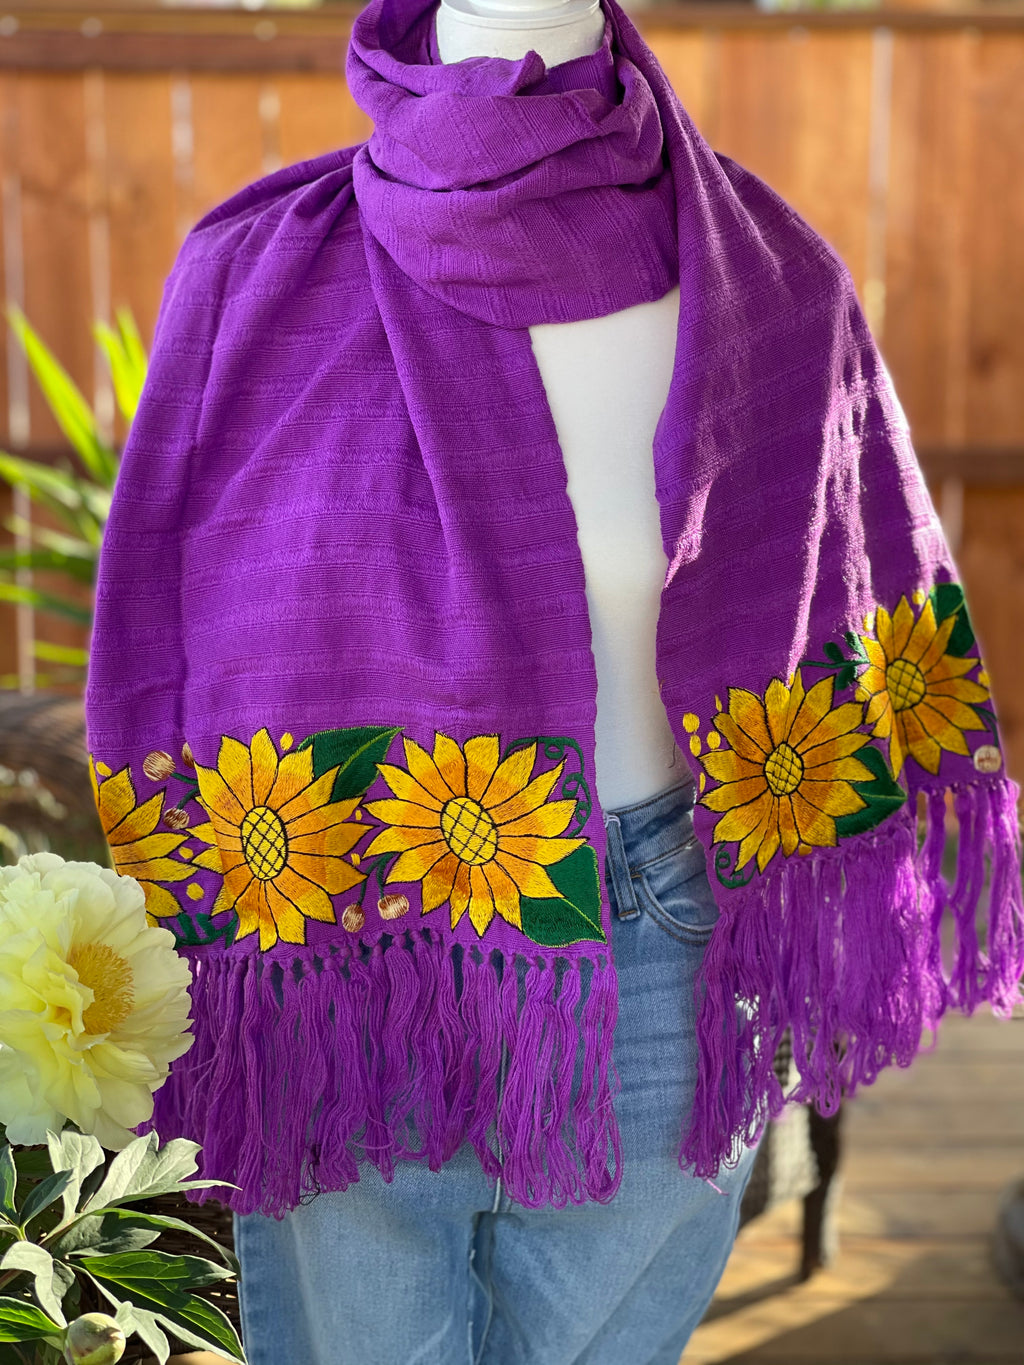 Rebozos purple w/sunflower